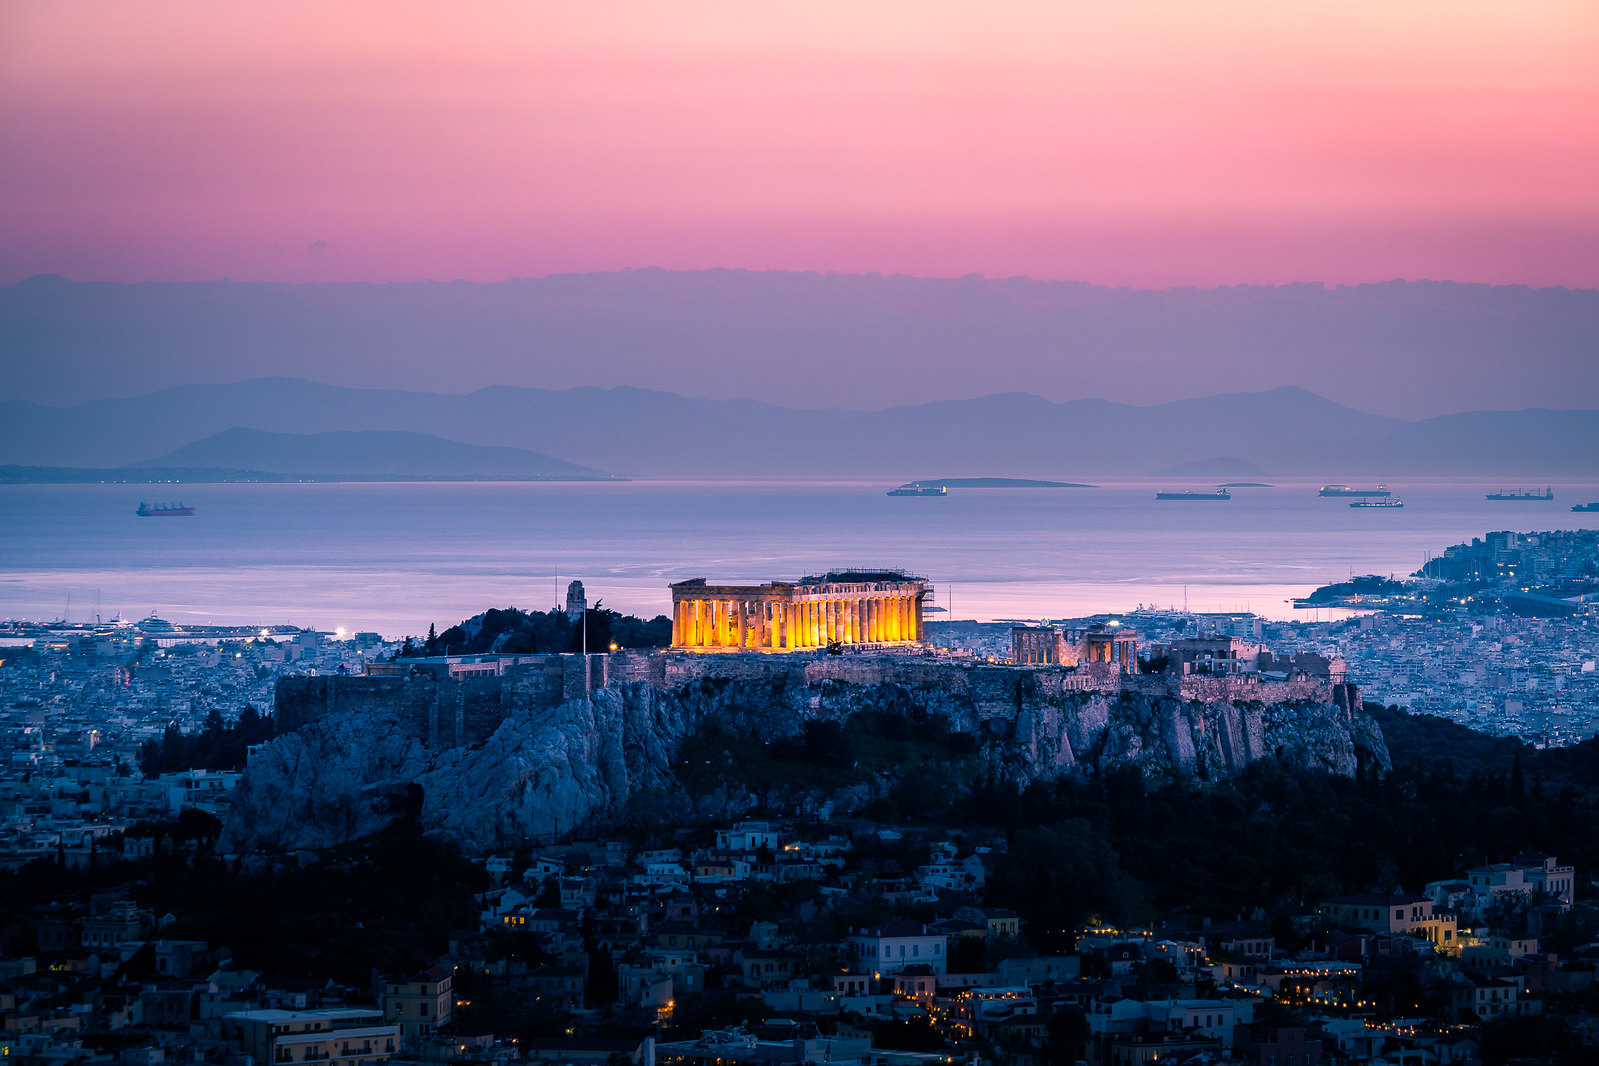 Acropolis - Athens, Greece - Travel photography